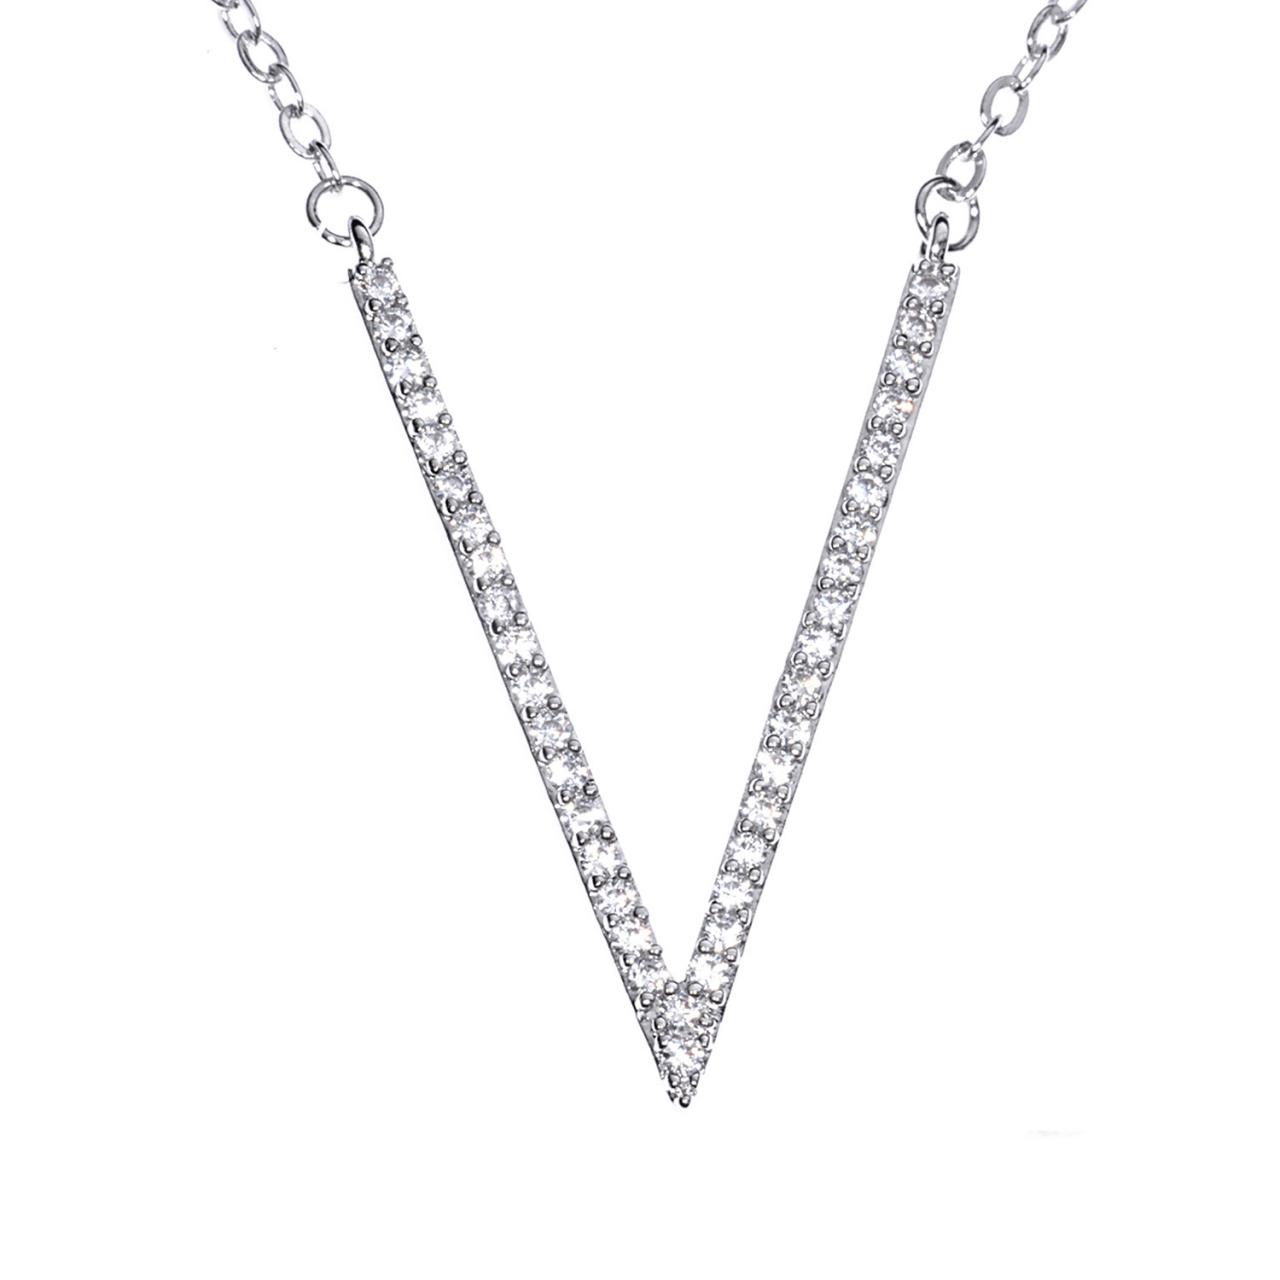 Silver Necklace / Dainty Necklace / Delicate Necklace / Classy Jewelry / Simple Necklace / Everyday Necklace / V Necklace / Zircon Necklace